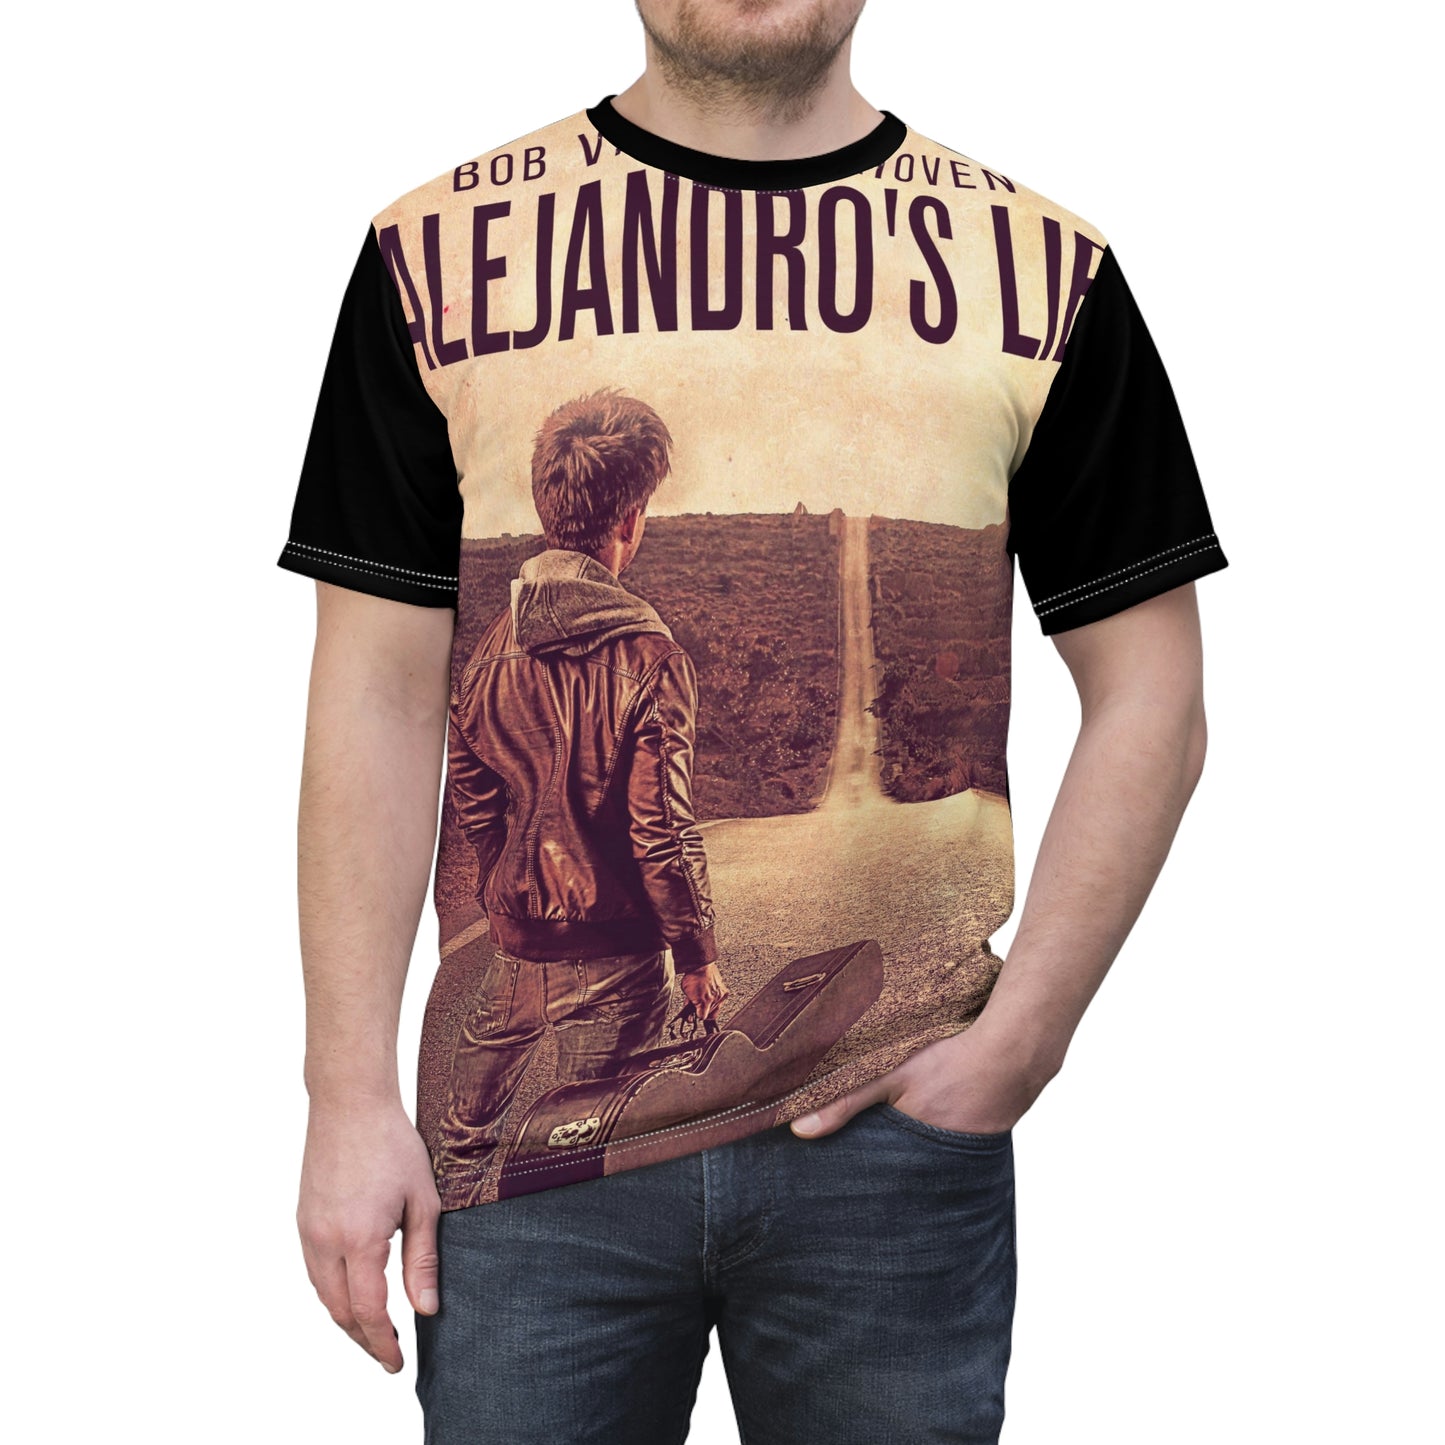 Alejandro???s Lie - Unisex All-Over Print Cut & Sew T-Shirt